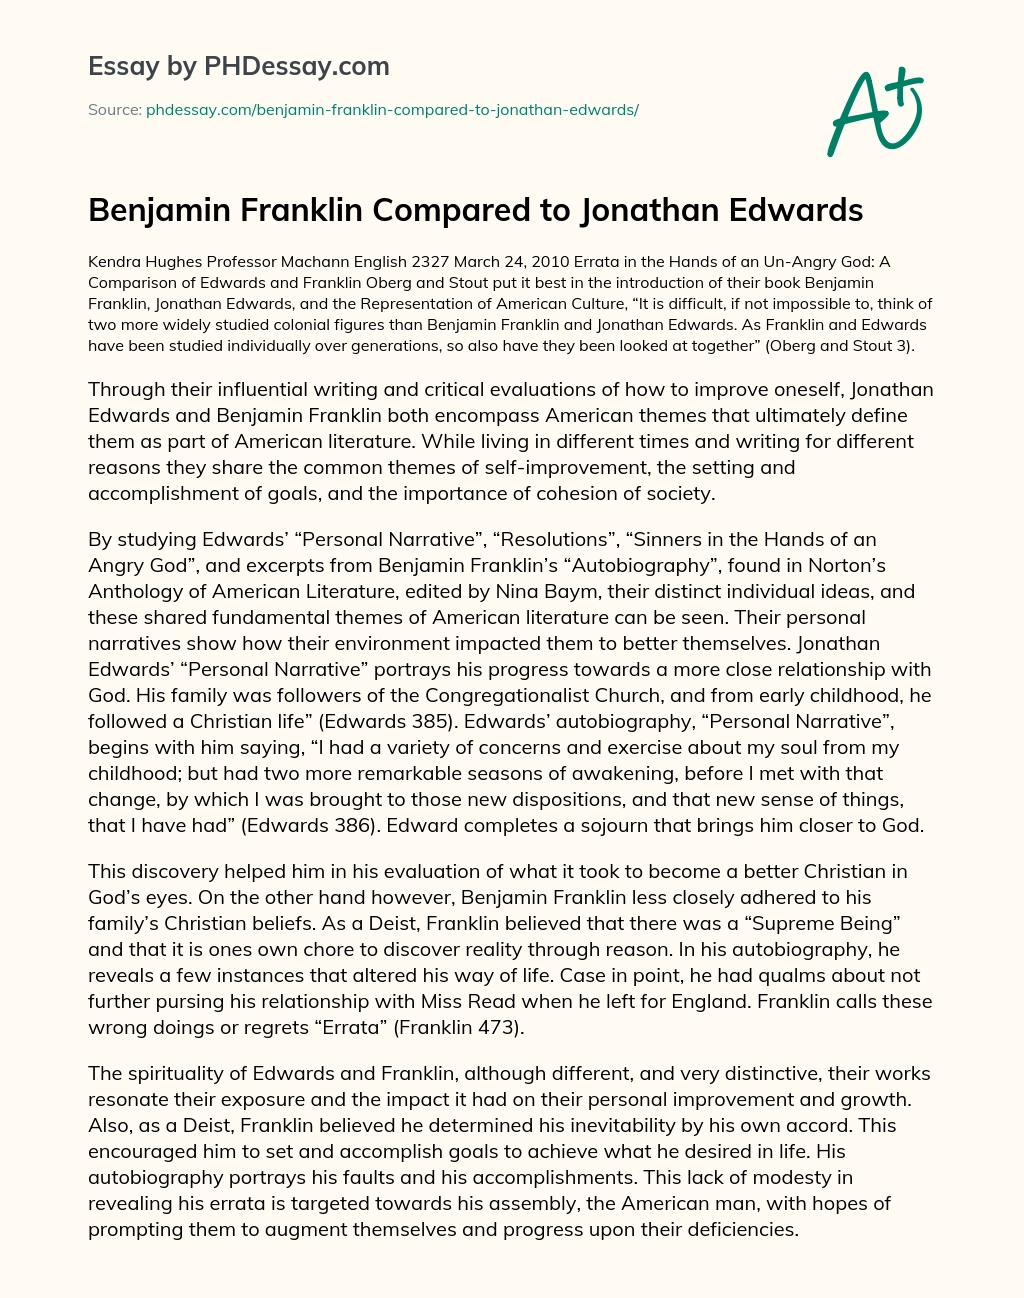 Benjamin Franklin Compared to Jonathan Edwards essay